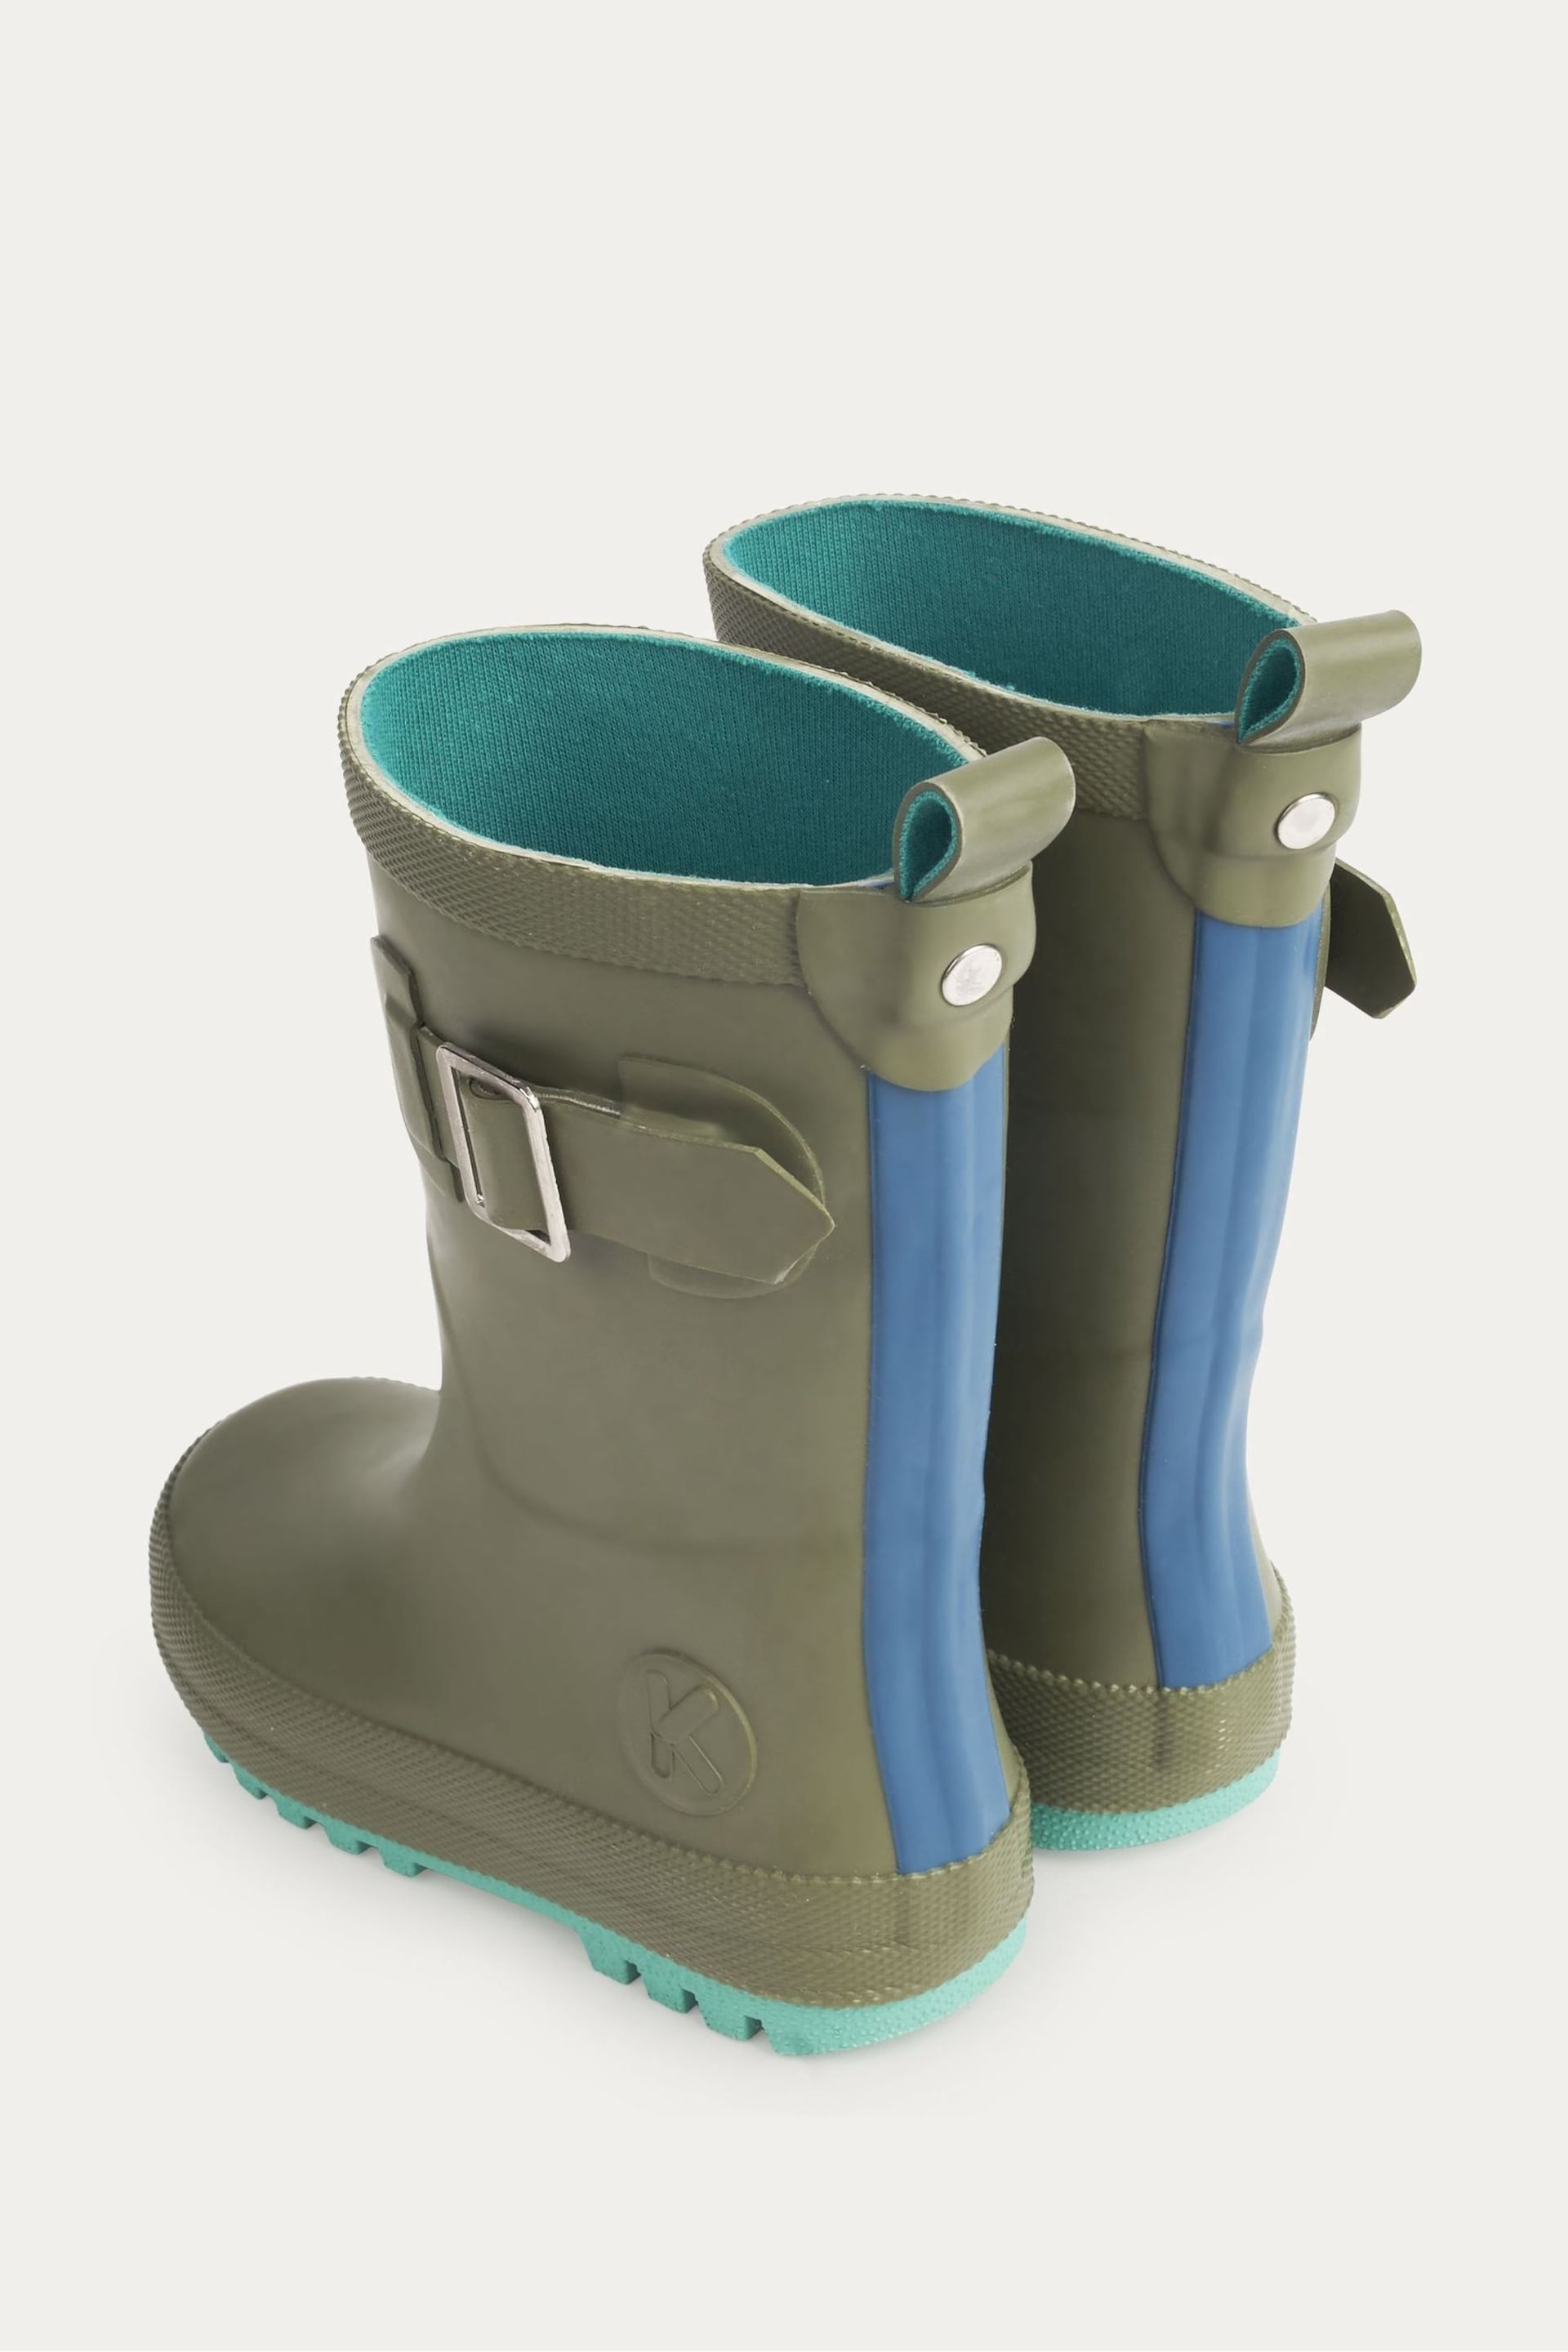 KIDLY Rain Boots with Binding - Image 3 of 5